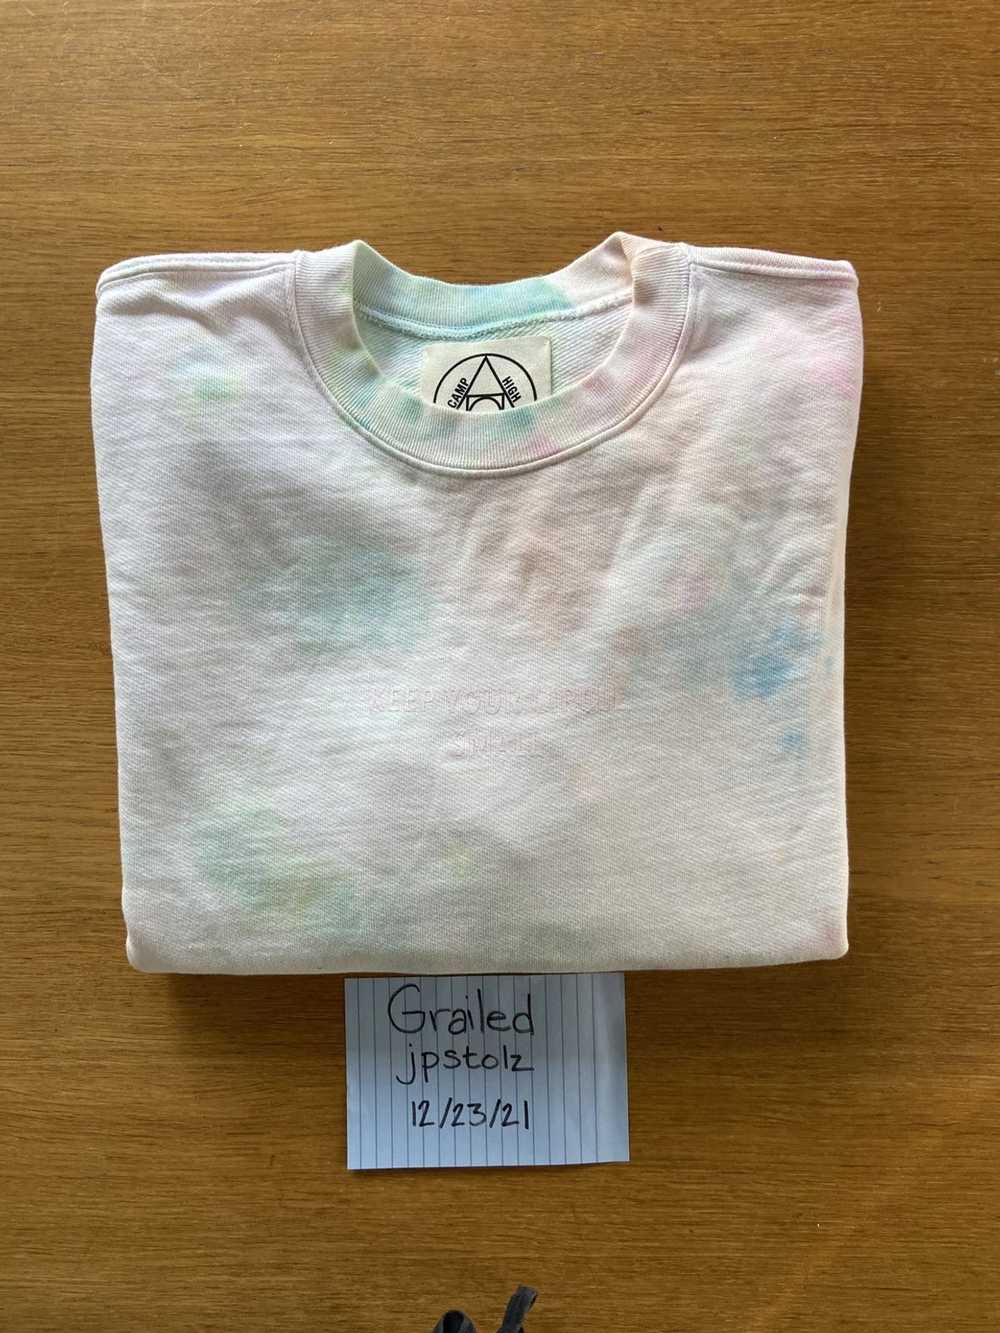 Camp High Camp High tie dye sweatshirt XL - image 1